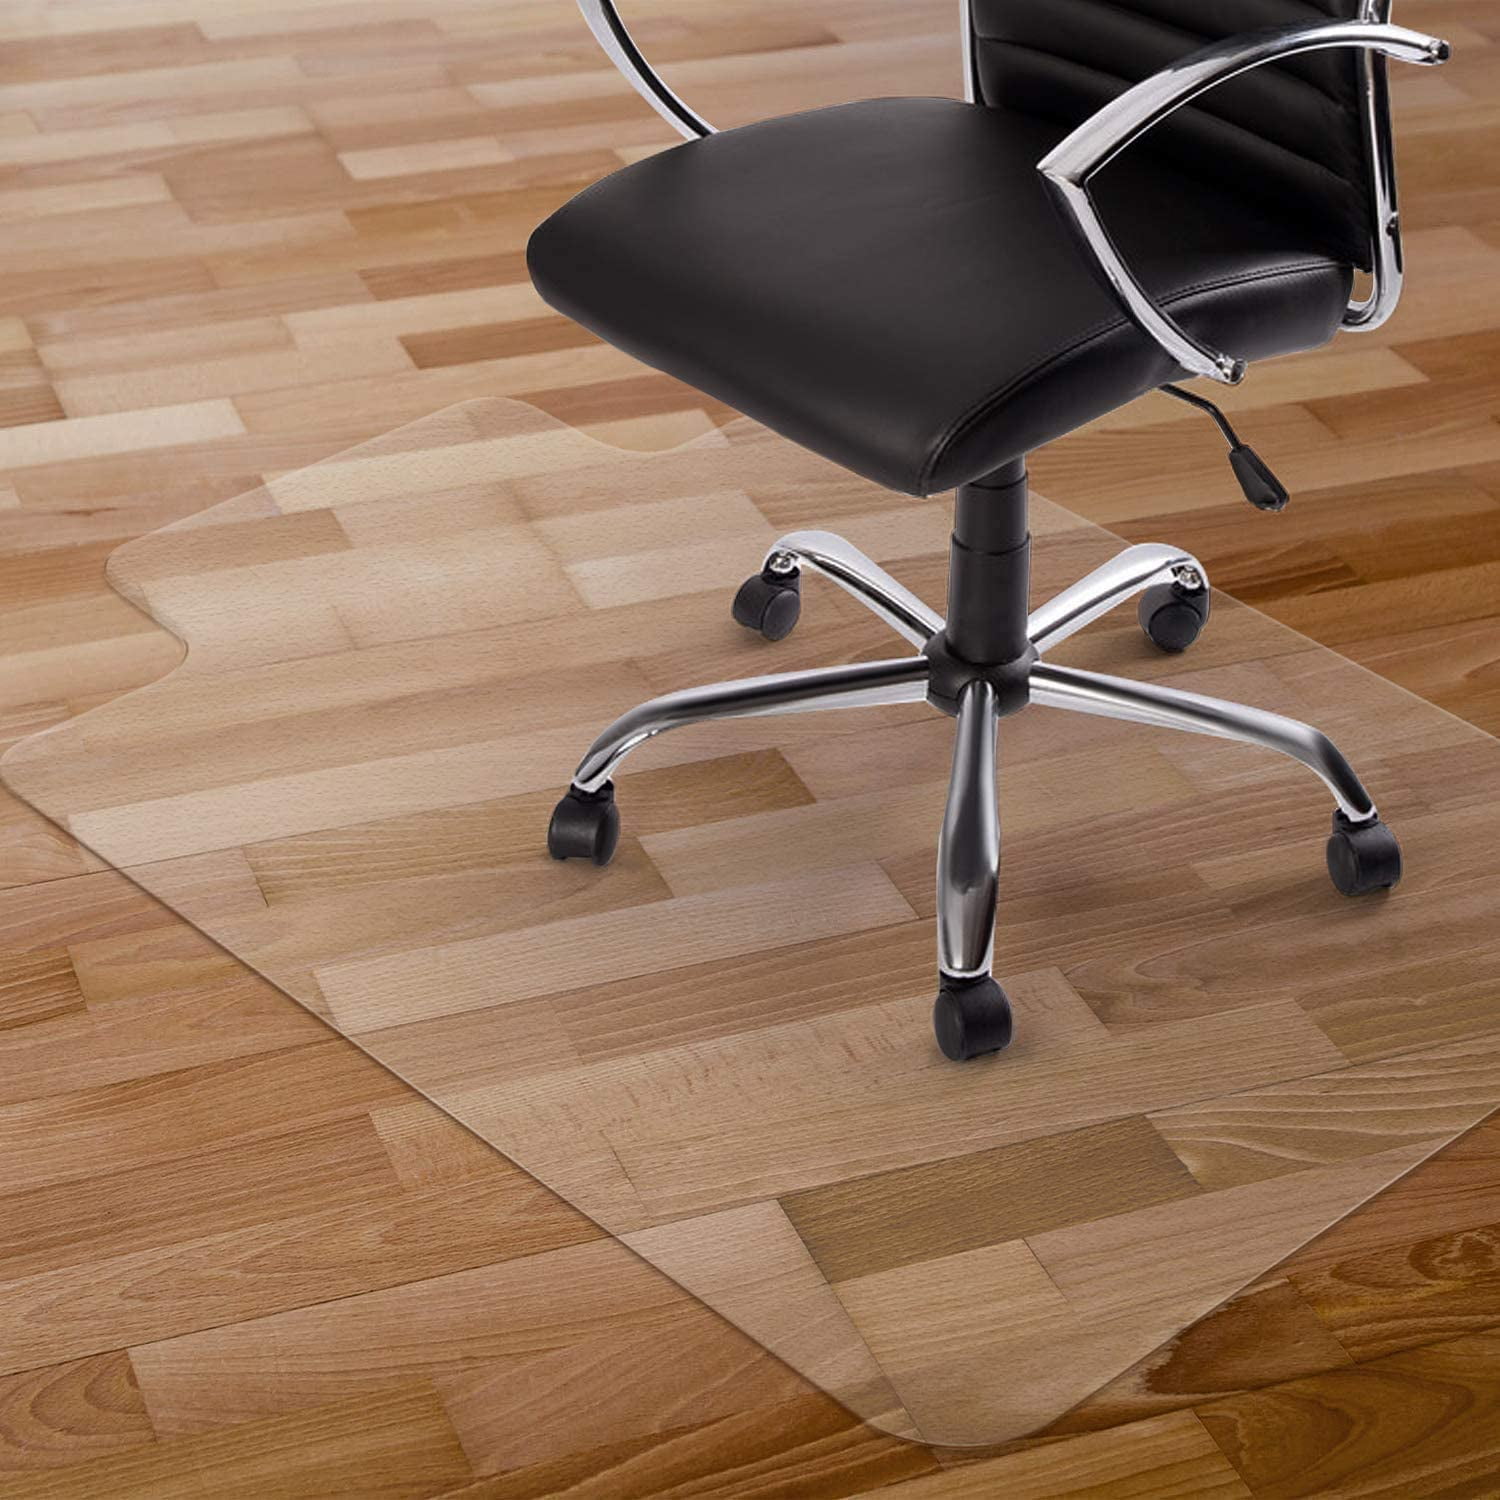 JCHL Office Chair Mat for Hard Floor Tile Floor 29.5x47.2 Non-Toxic Phthalate Free Durable Non Slip BPA Free 